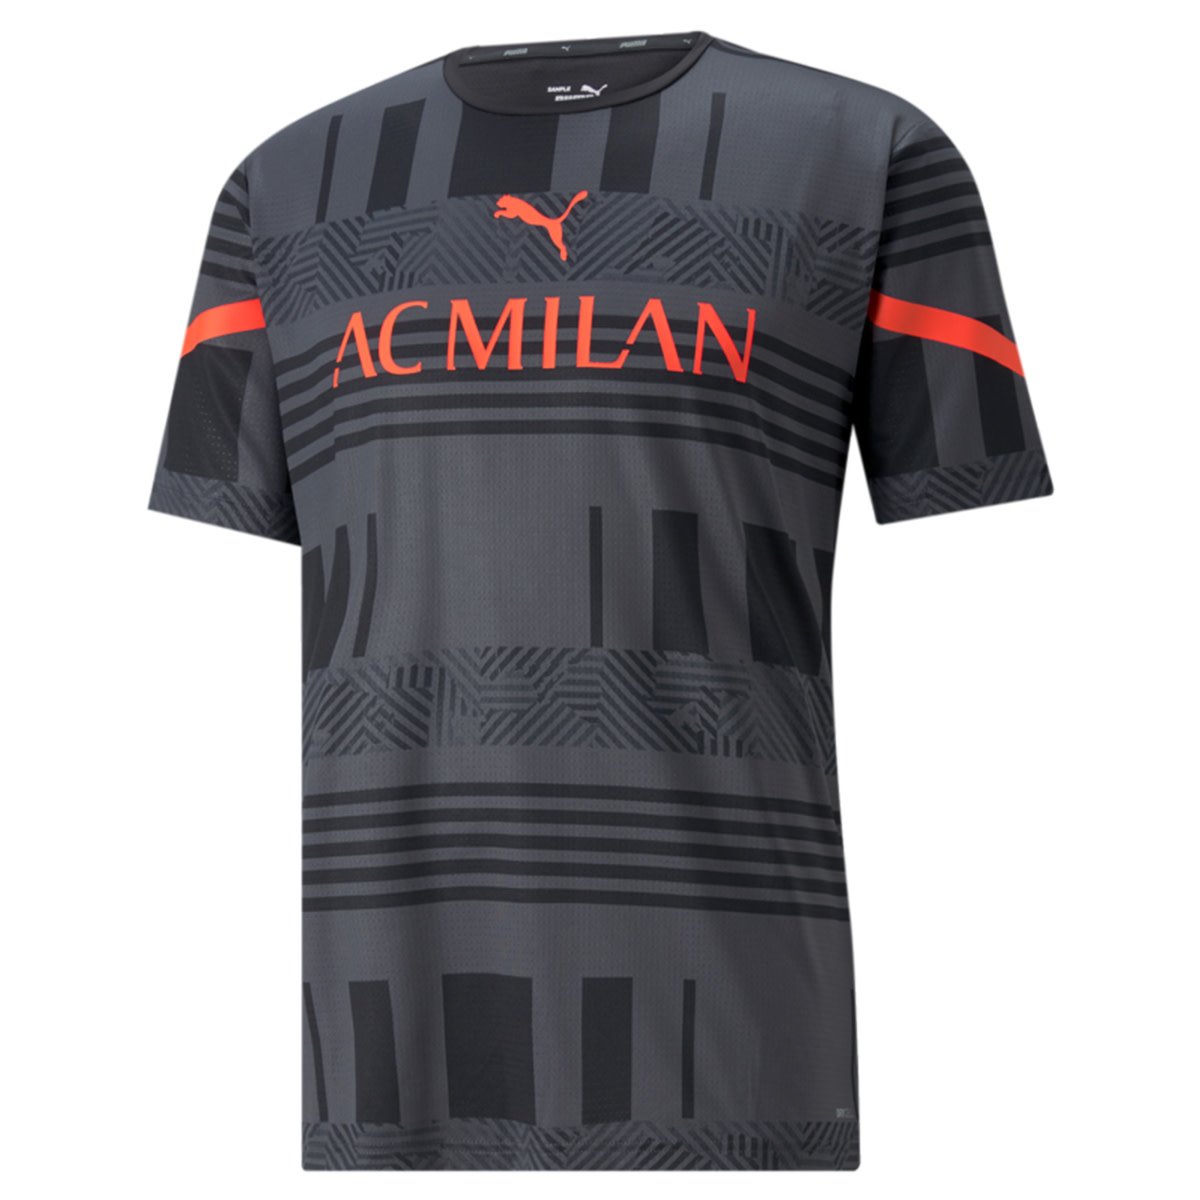 Puma AC Milan Prematch Jersey Black